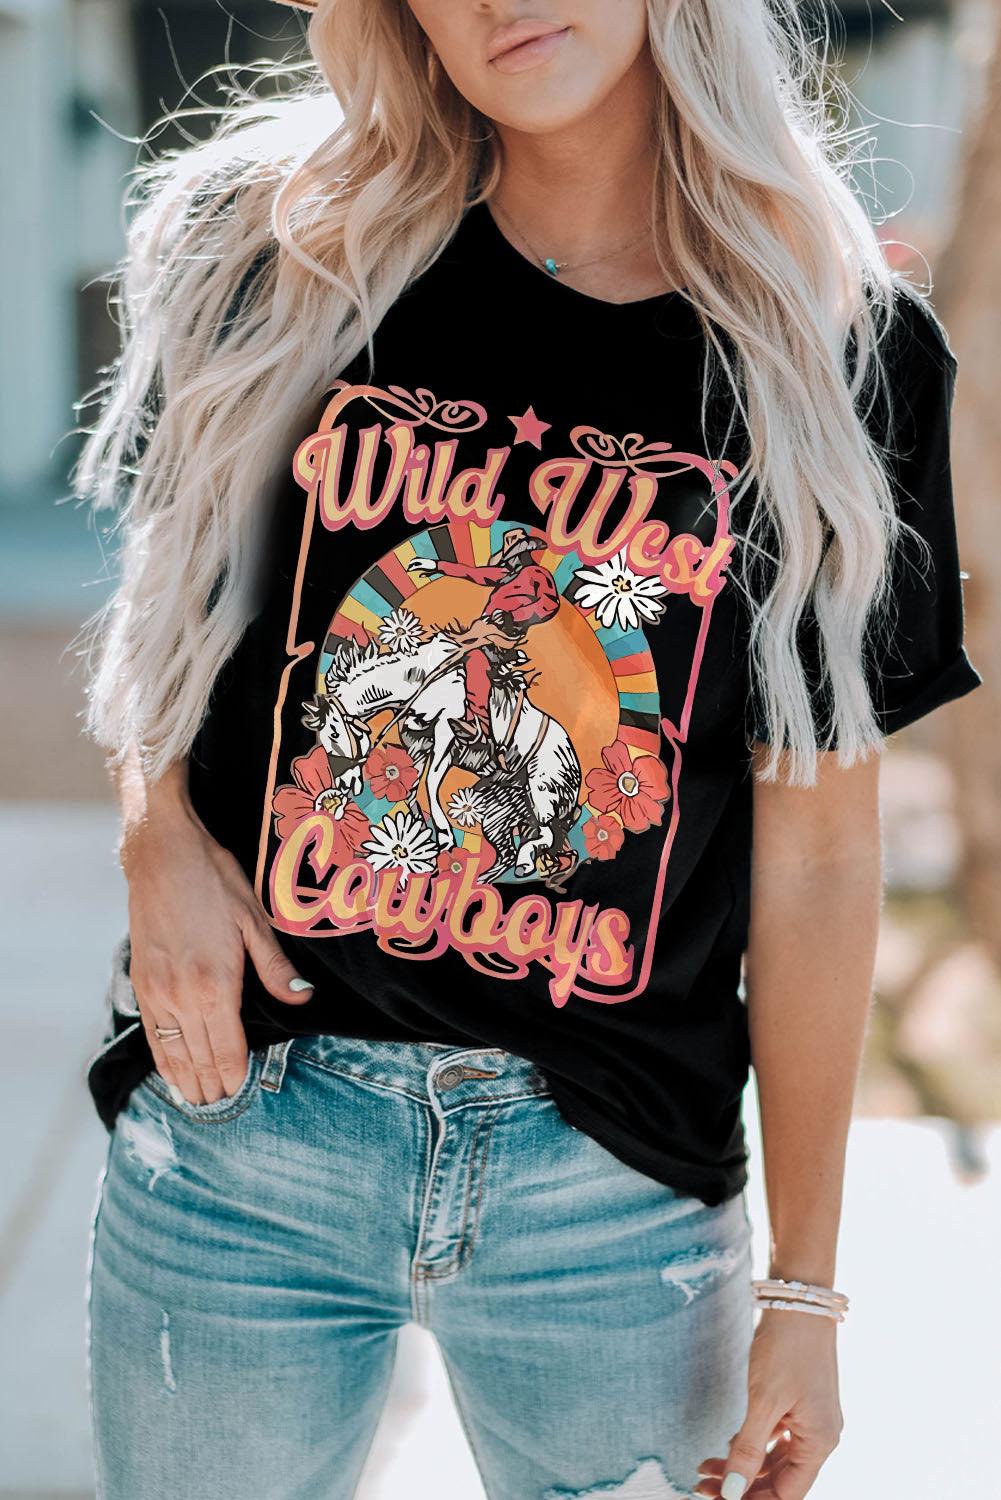 WILD WEST COWBOYS Graphic Tee Shirt - Lucianne Boutique